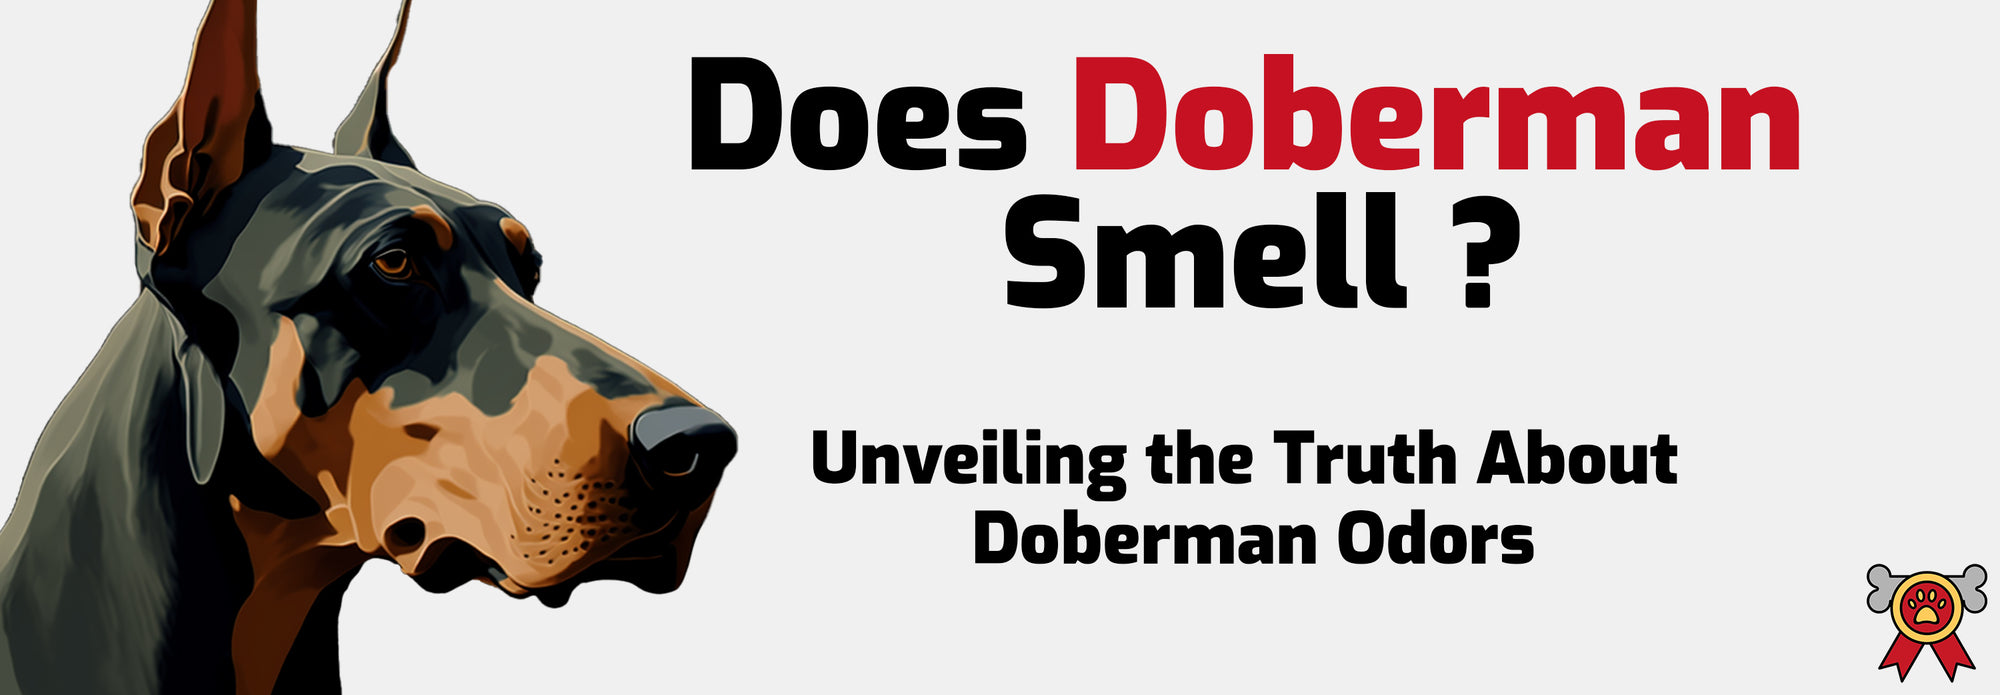 Does Doberman Smell